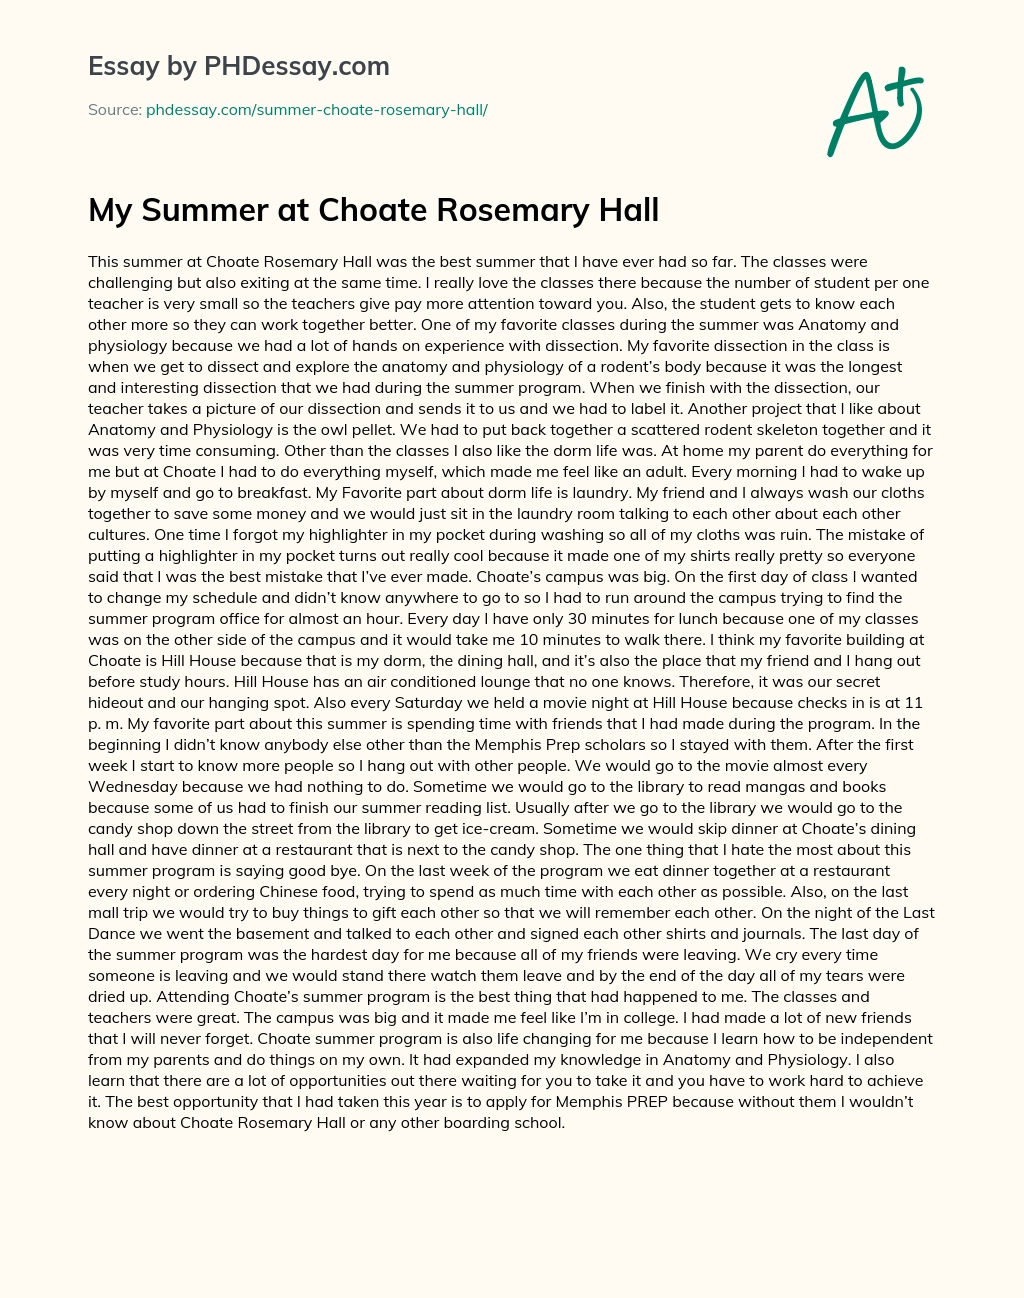 My Summer at Choate Rosemary Hall essay